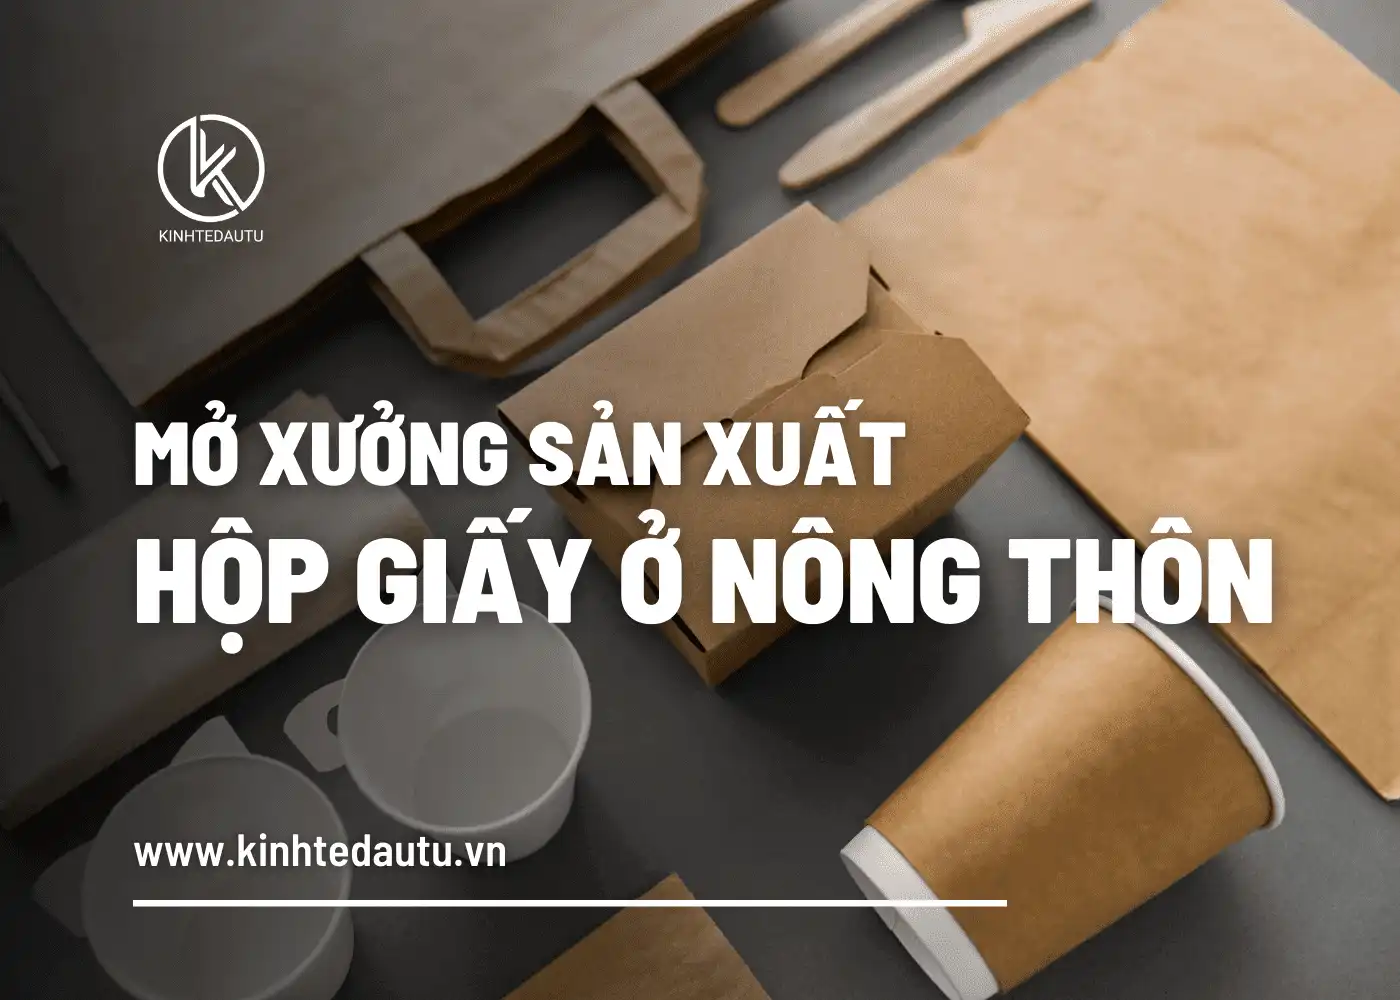 Mo-xuong-san-xuat-hop-giay-o-nong-thon.png